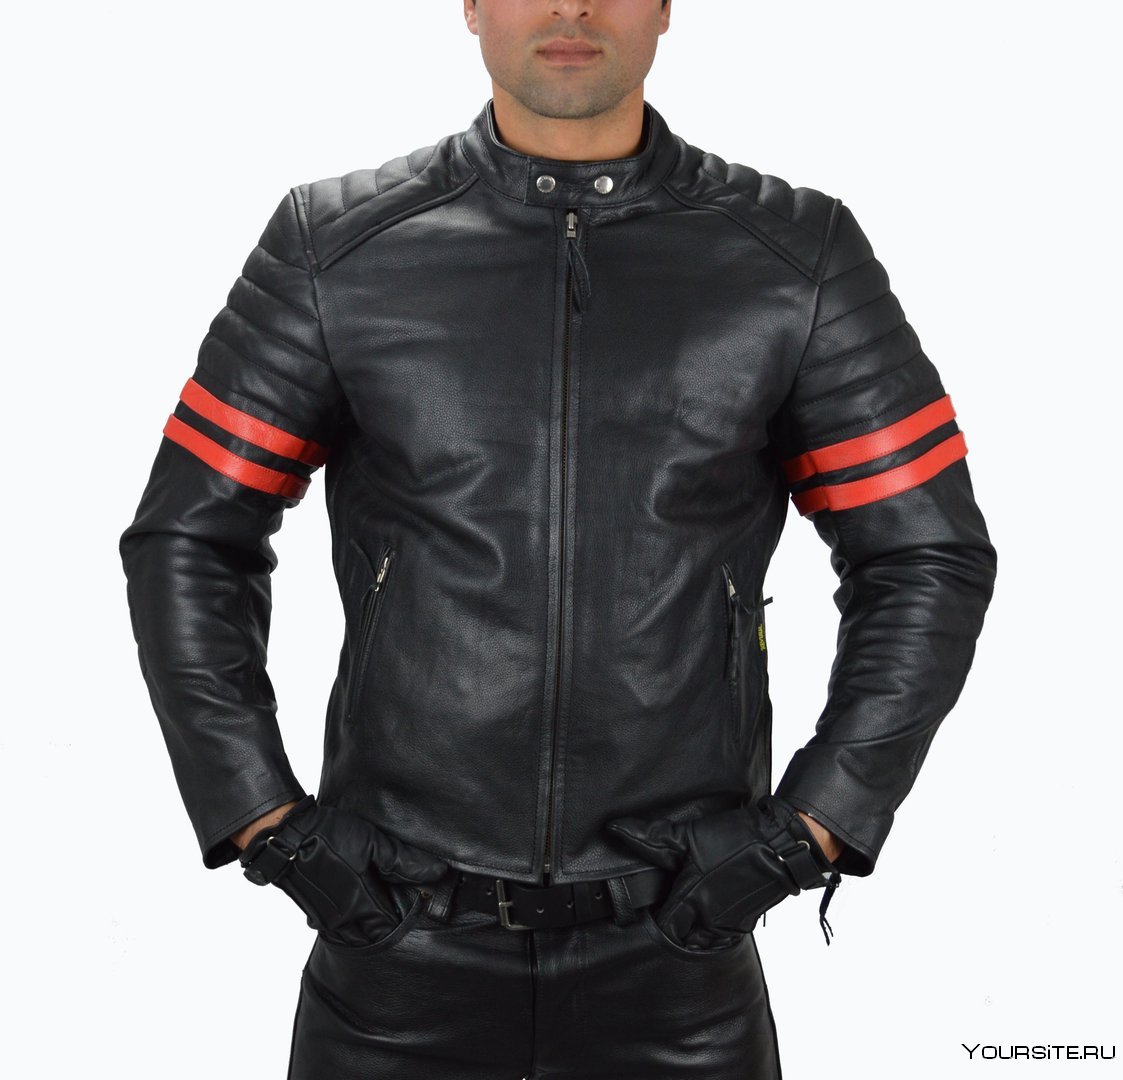 Leather Jacket Side